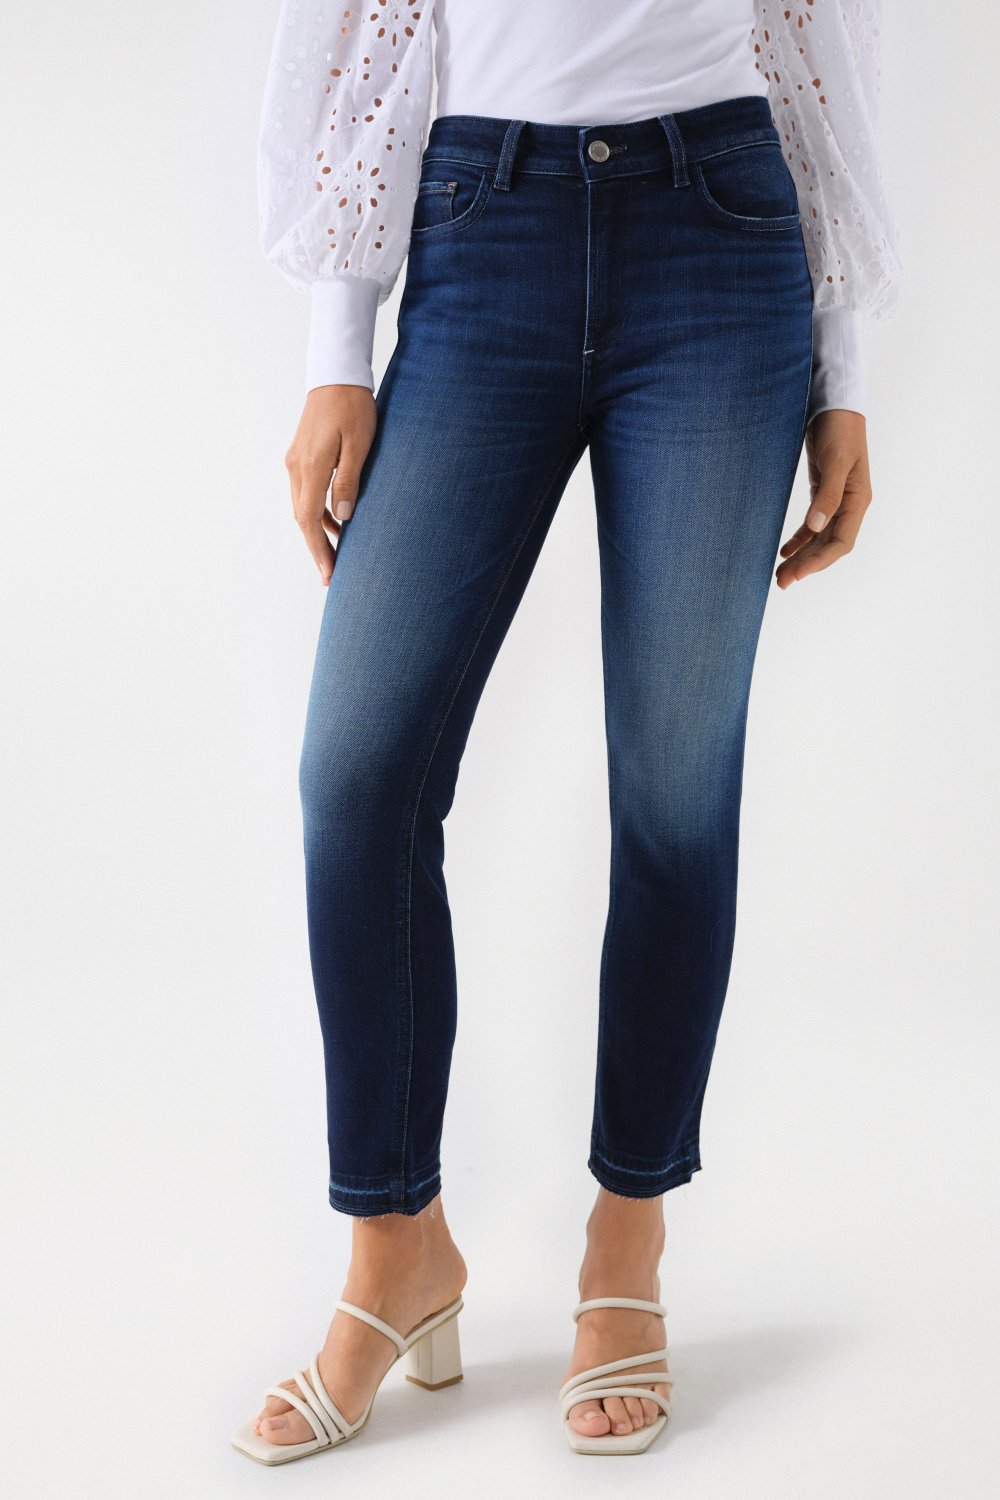 Calça Jeans Skinny J Brand 36  Calça Feminina J Brand Usado